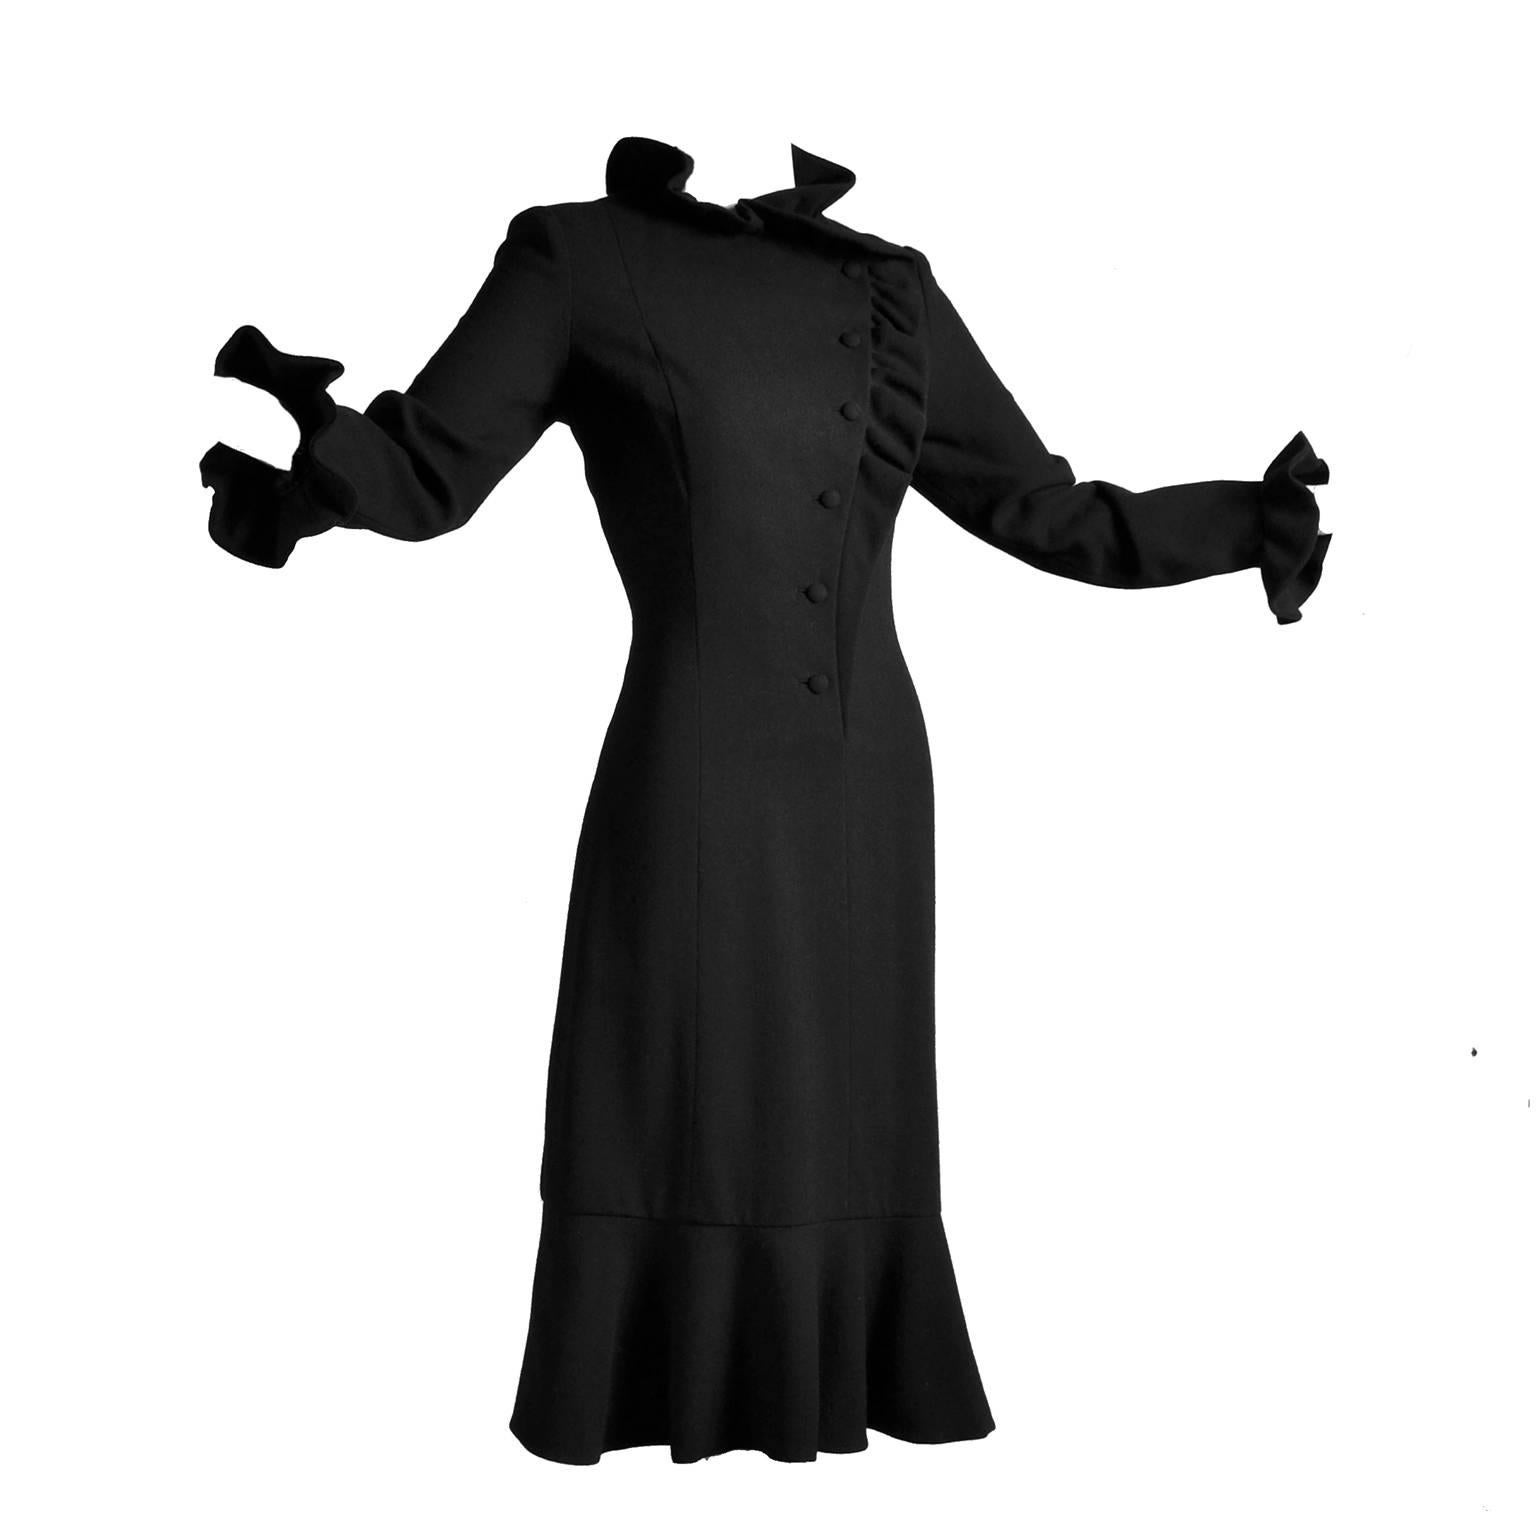 Jean Louis for I Magnin Vintage Dress in Black Crepe W/ Ruffles & High Neck 